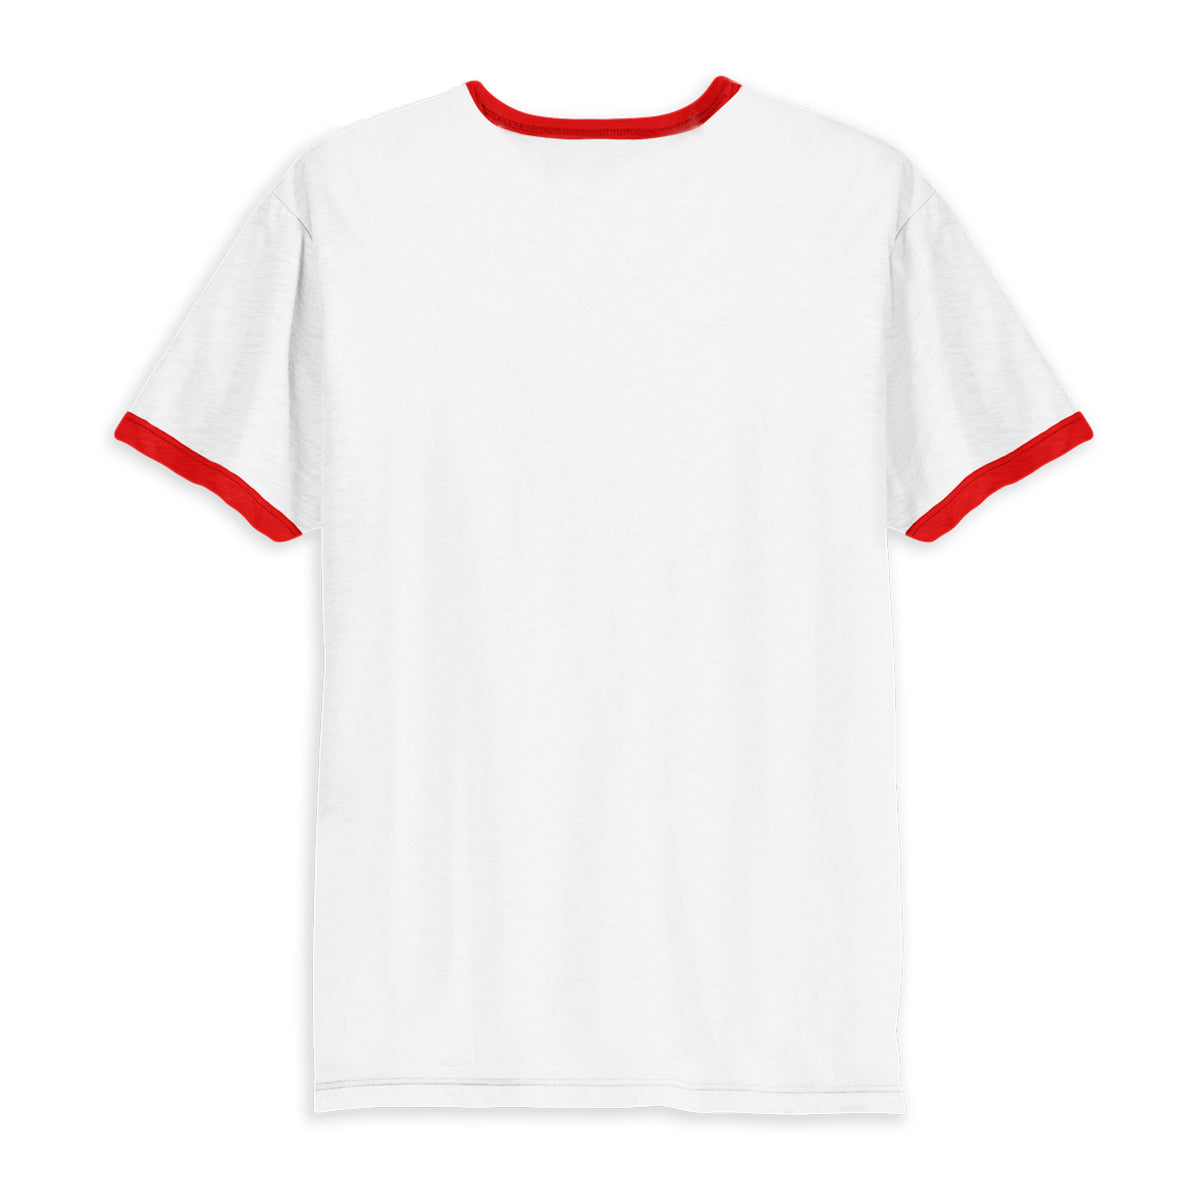 Beach Fossils Red Logo Ringer T Shirt